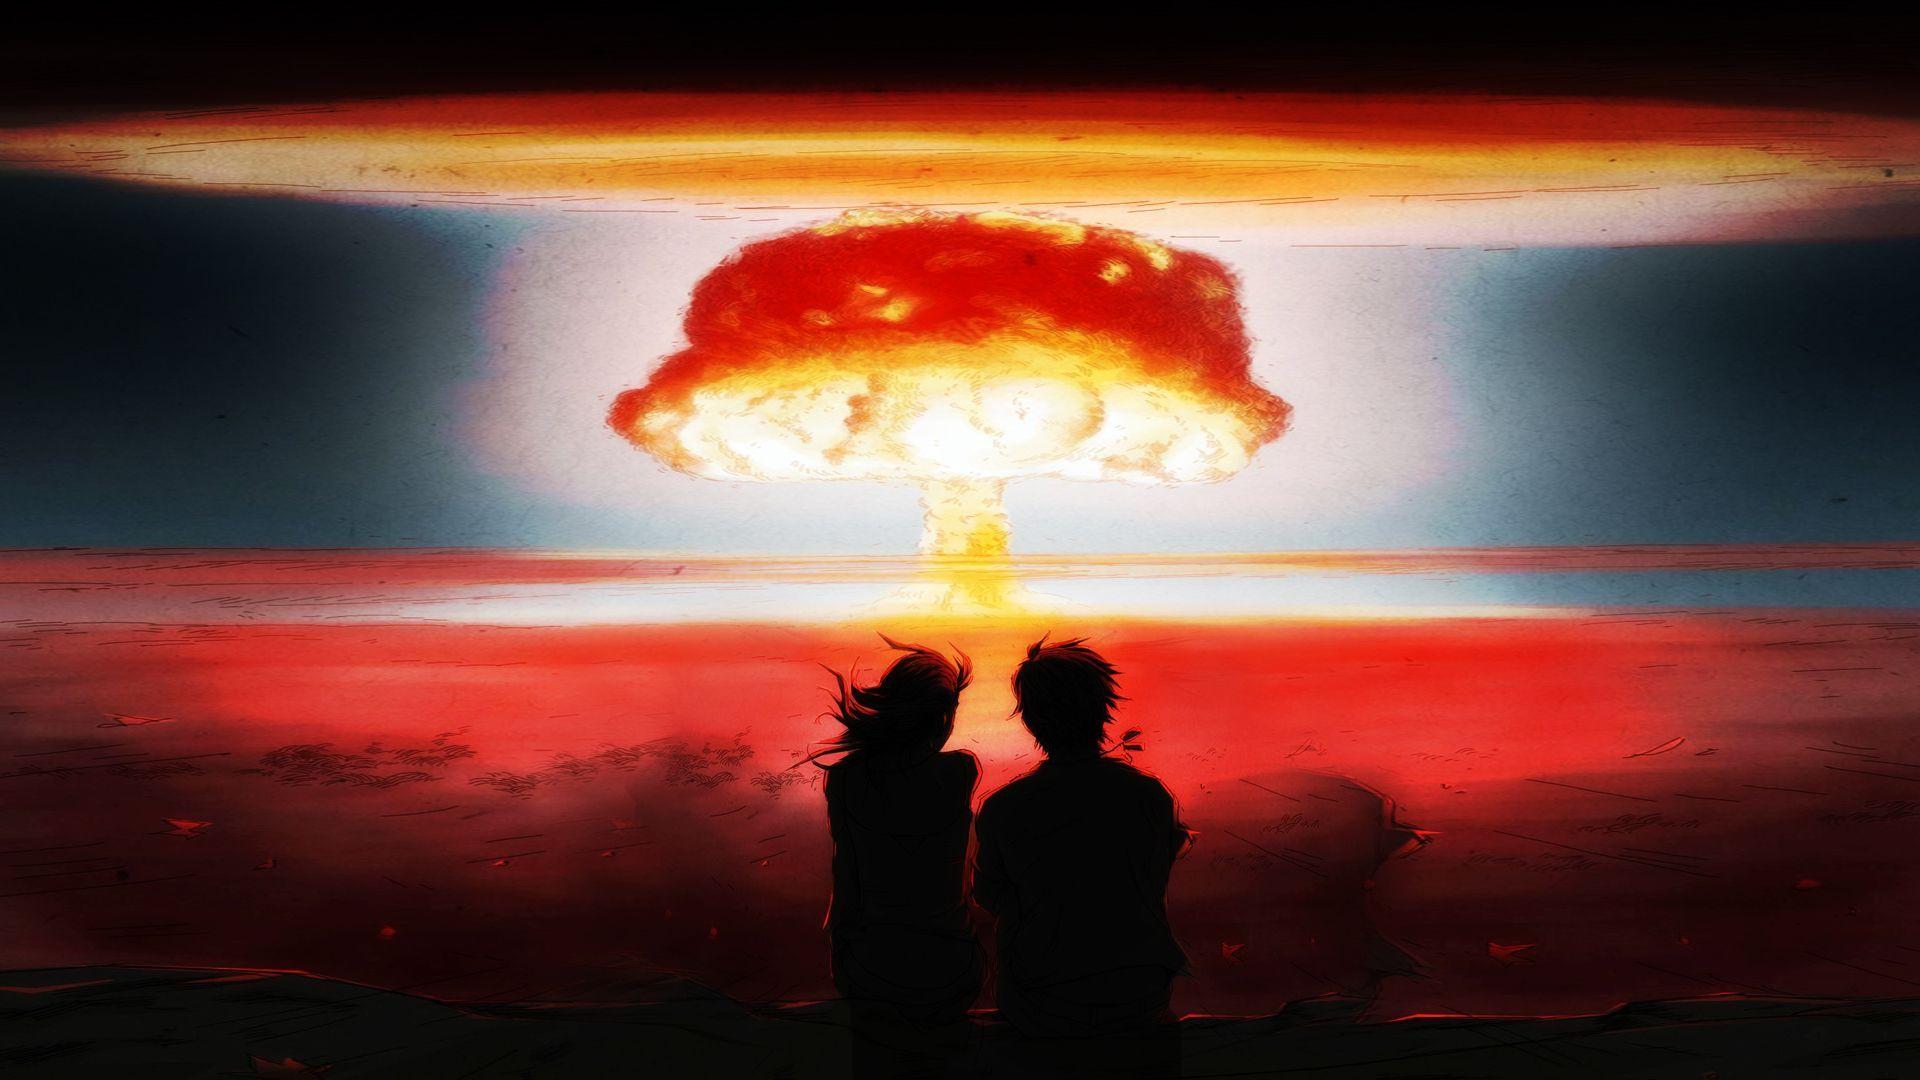 Nuclear Explosion Wallpaper HD. World wallpaper, Love wallpaper